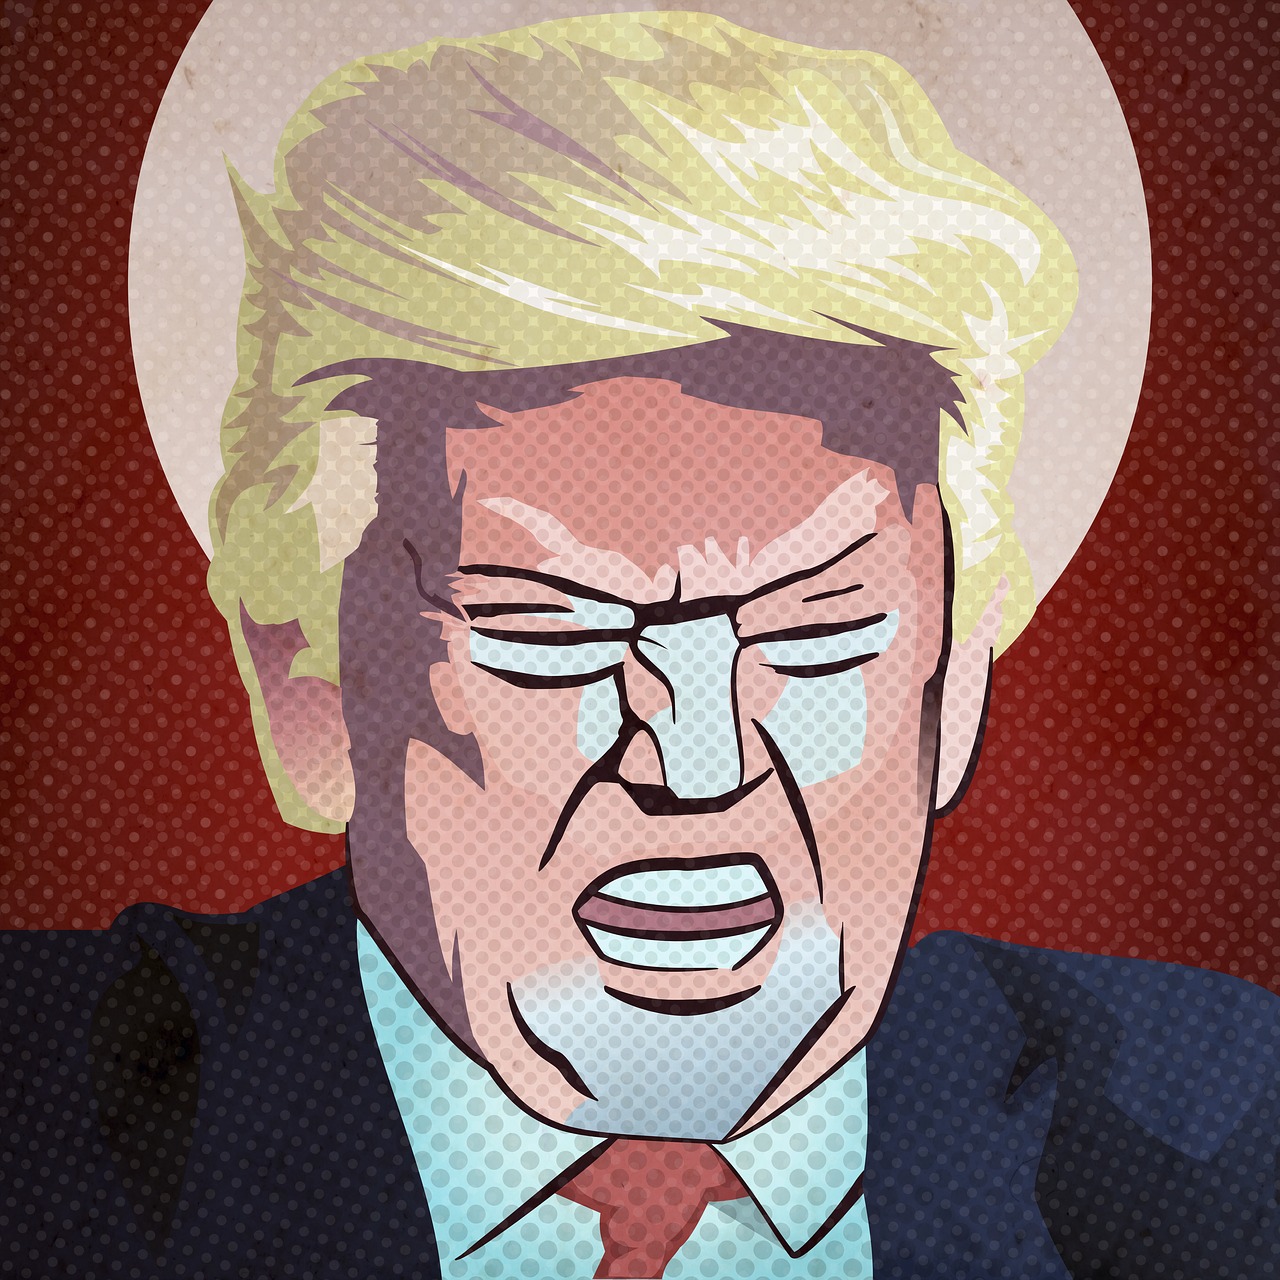 Donald Trump, America’s Elected Dictator